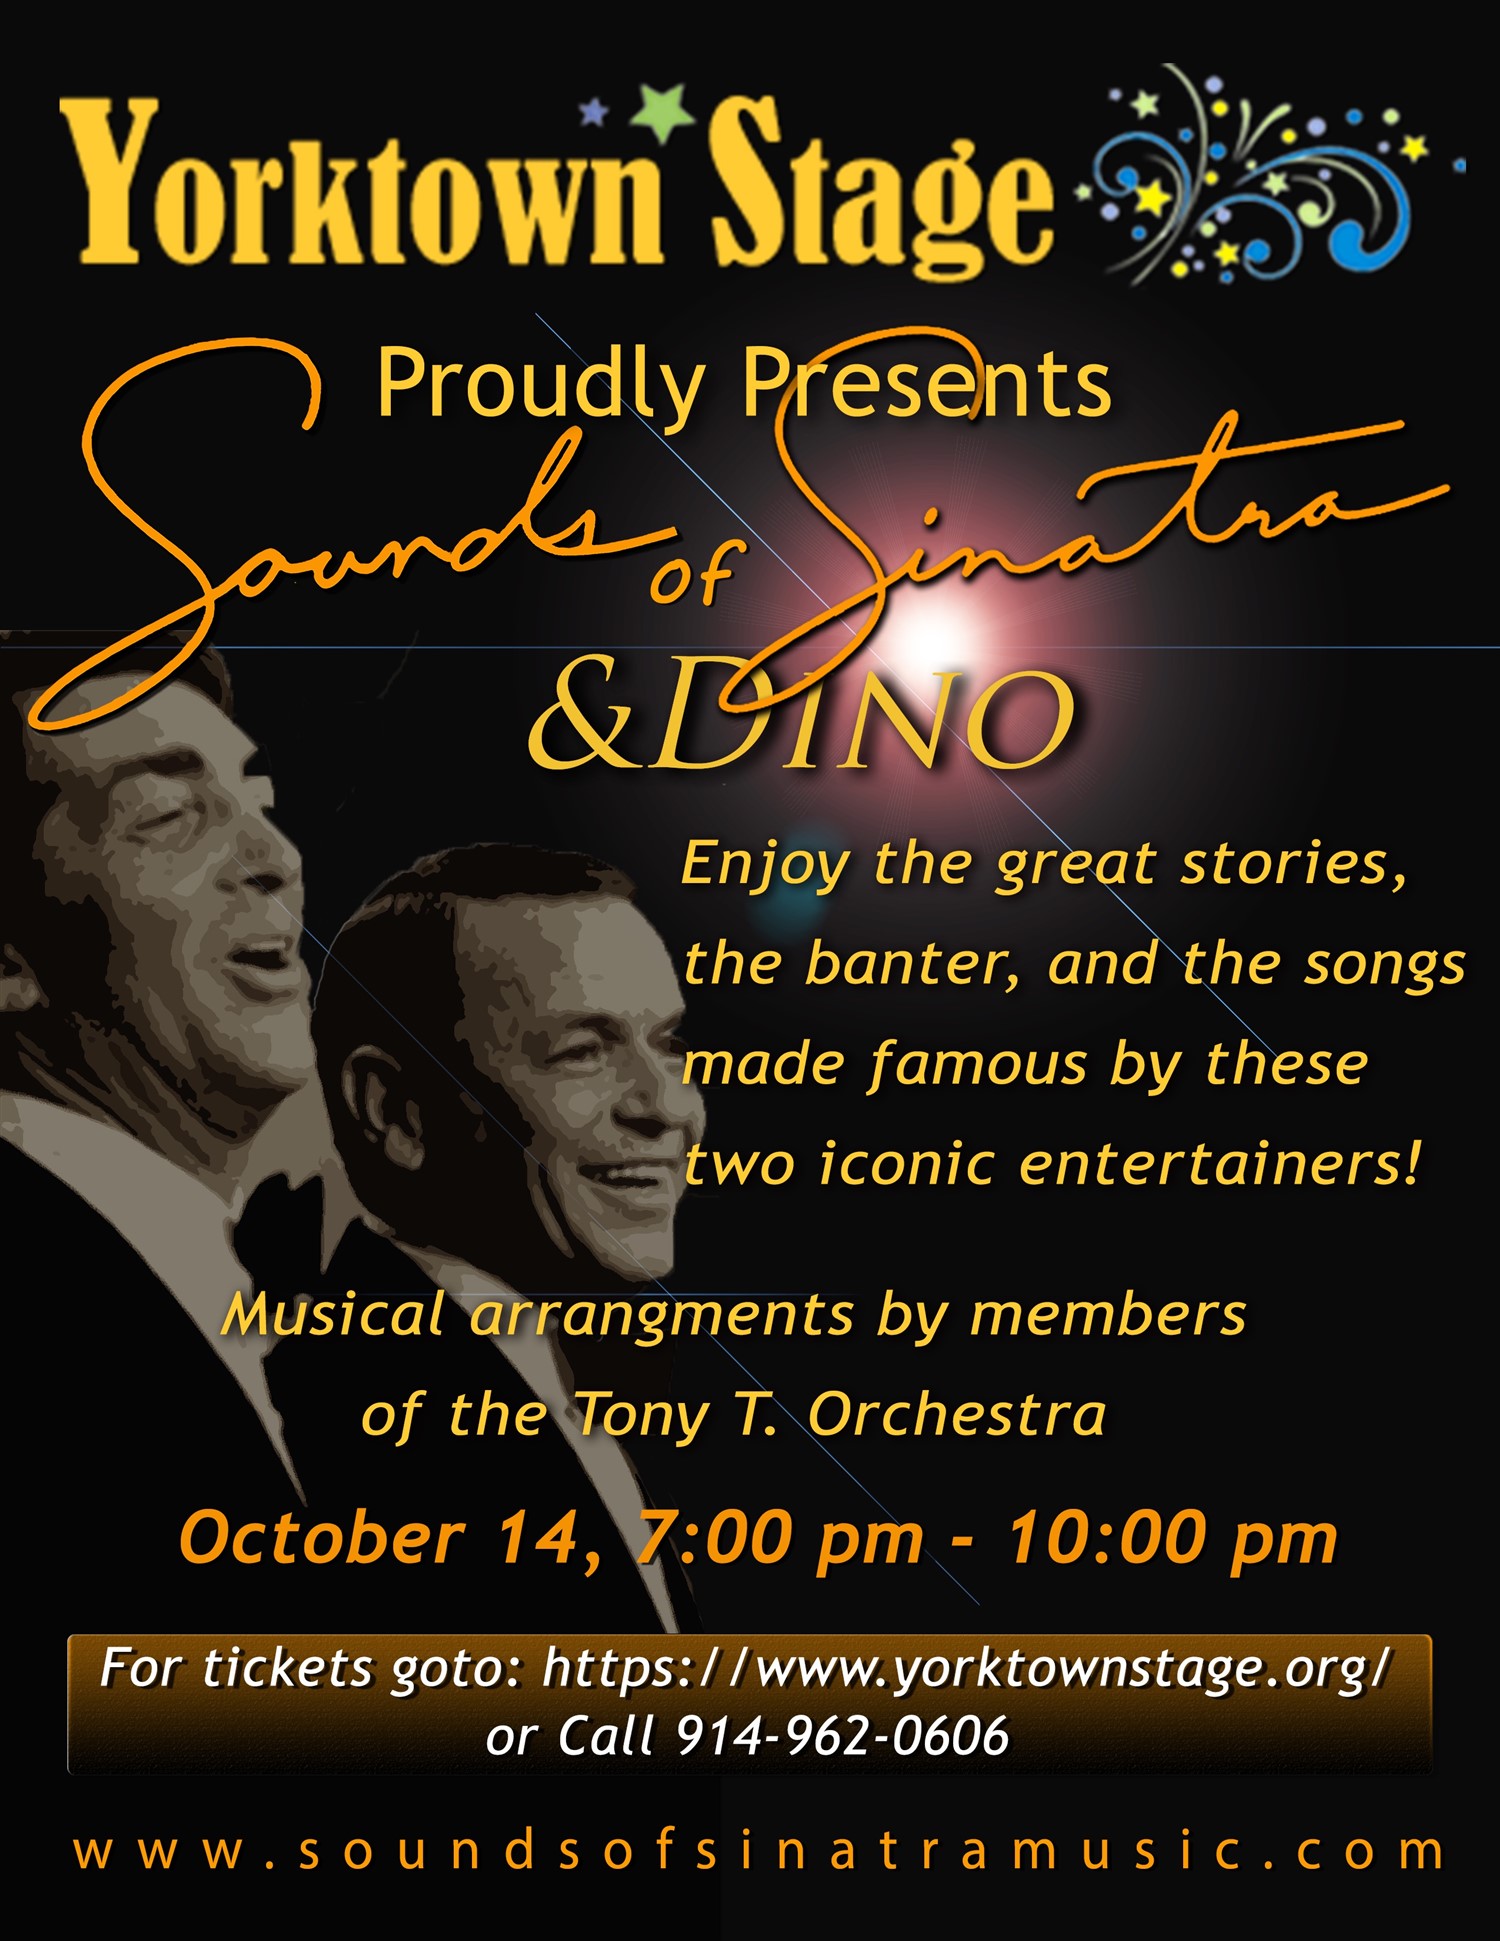 Sounds of Sinatra and Dino!  on oct. 14, 19:00@Yorktown Stage 2023 - Choisissez un siège,Achetez des billets et obtenez des informations surYorktown Stage 